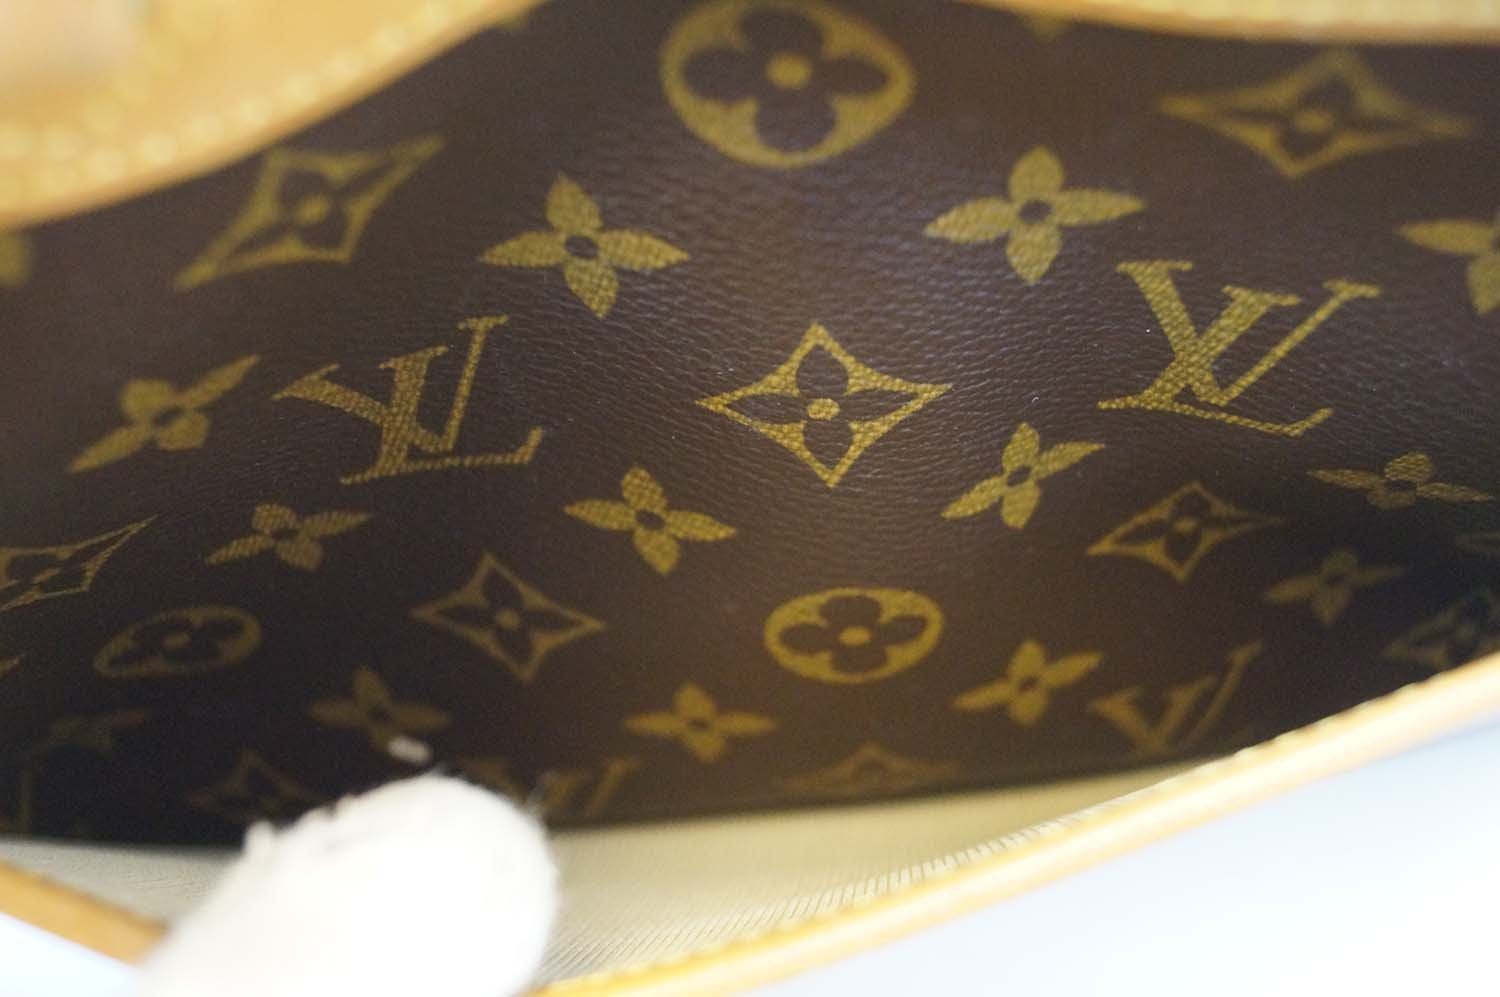 Louis Vuitton Trouville Monogram – Coco Approved Studio